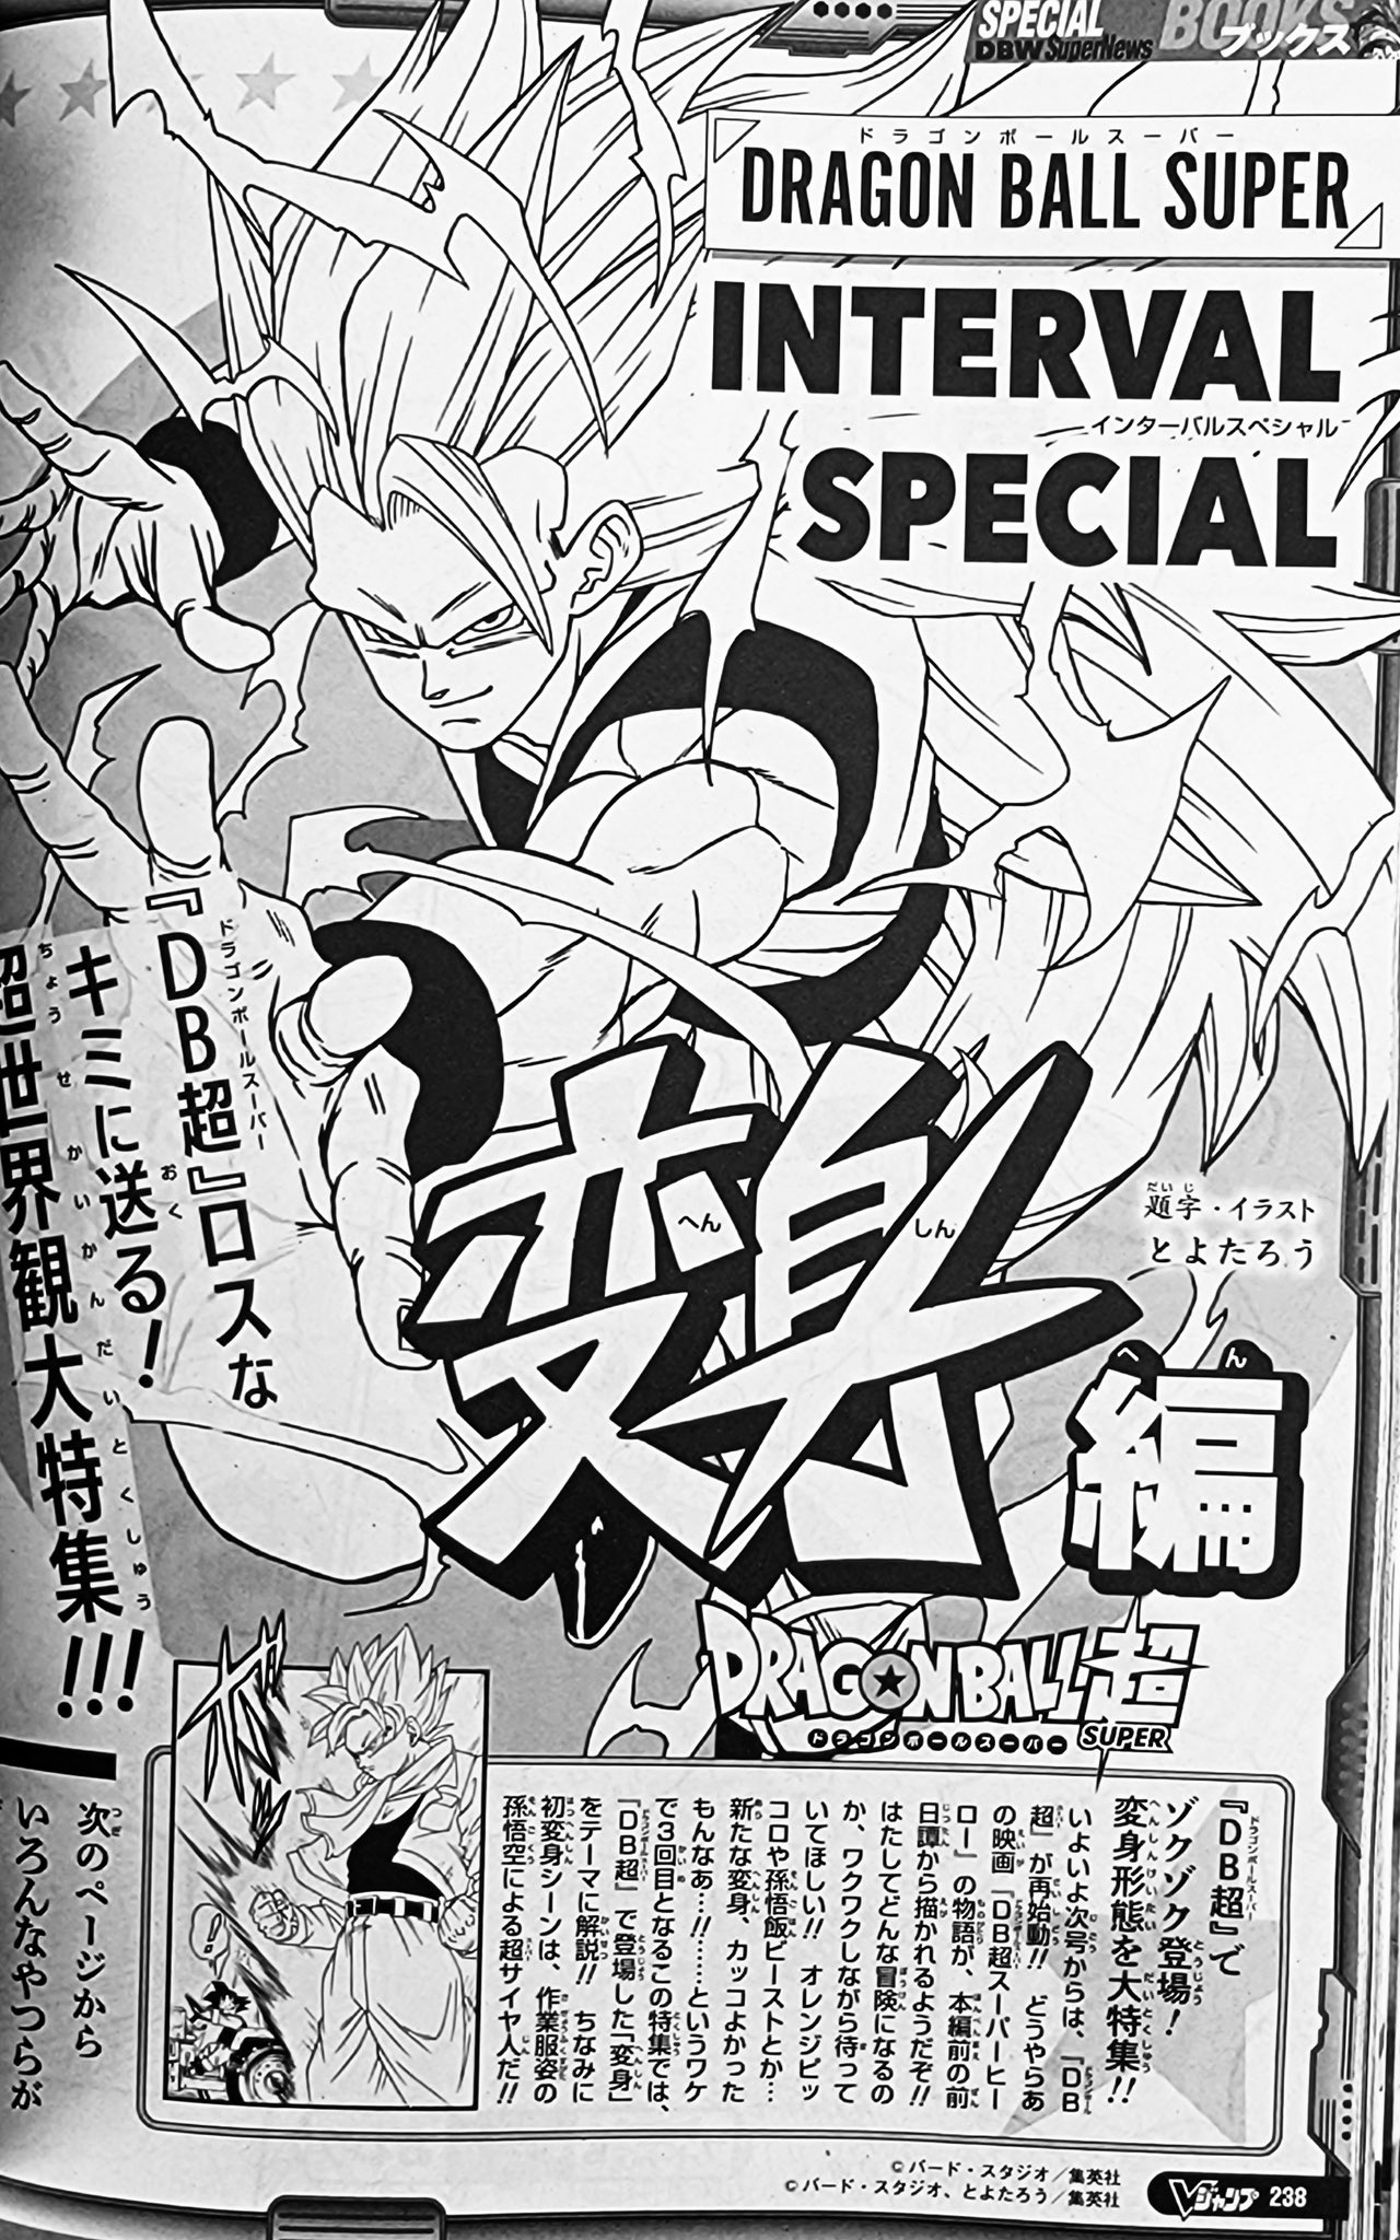 Goku’s Worst Super Saiyan Form Gets New Official Dragon Ball Super Art